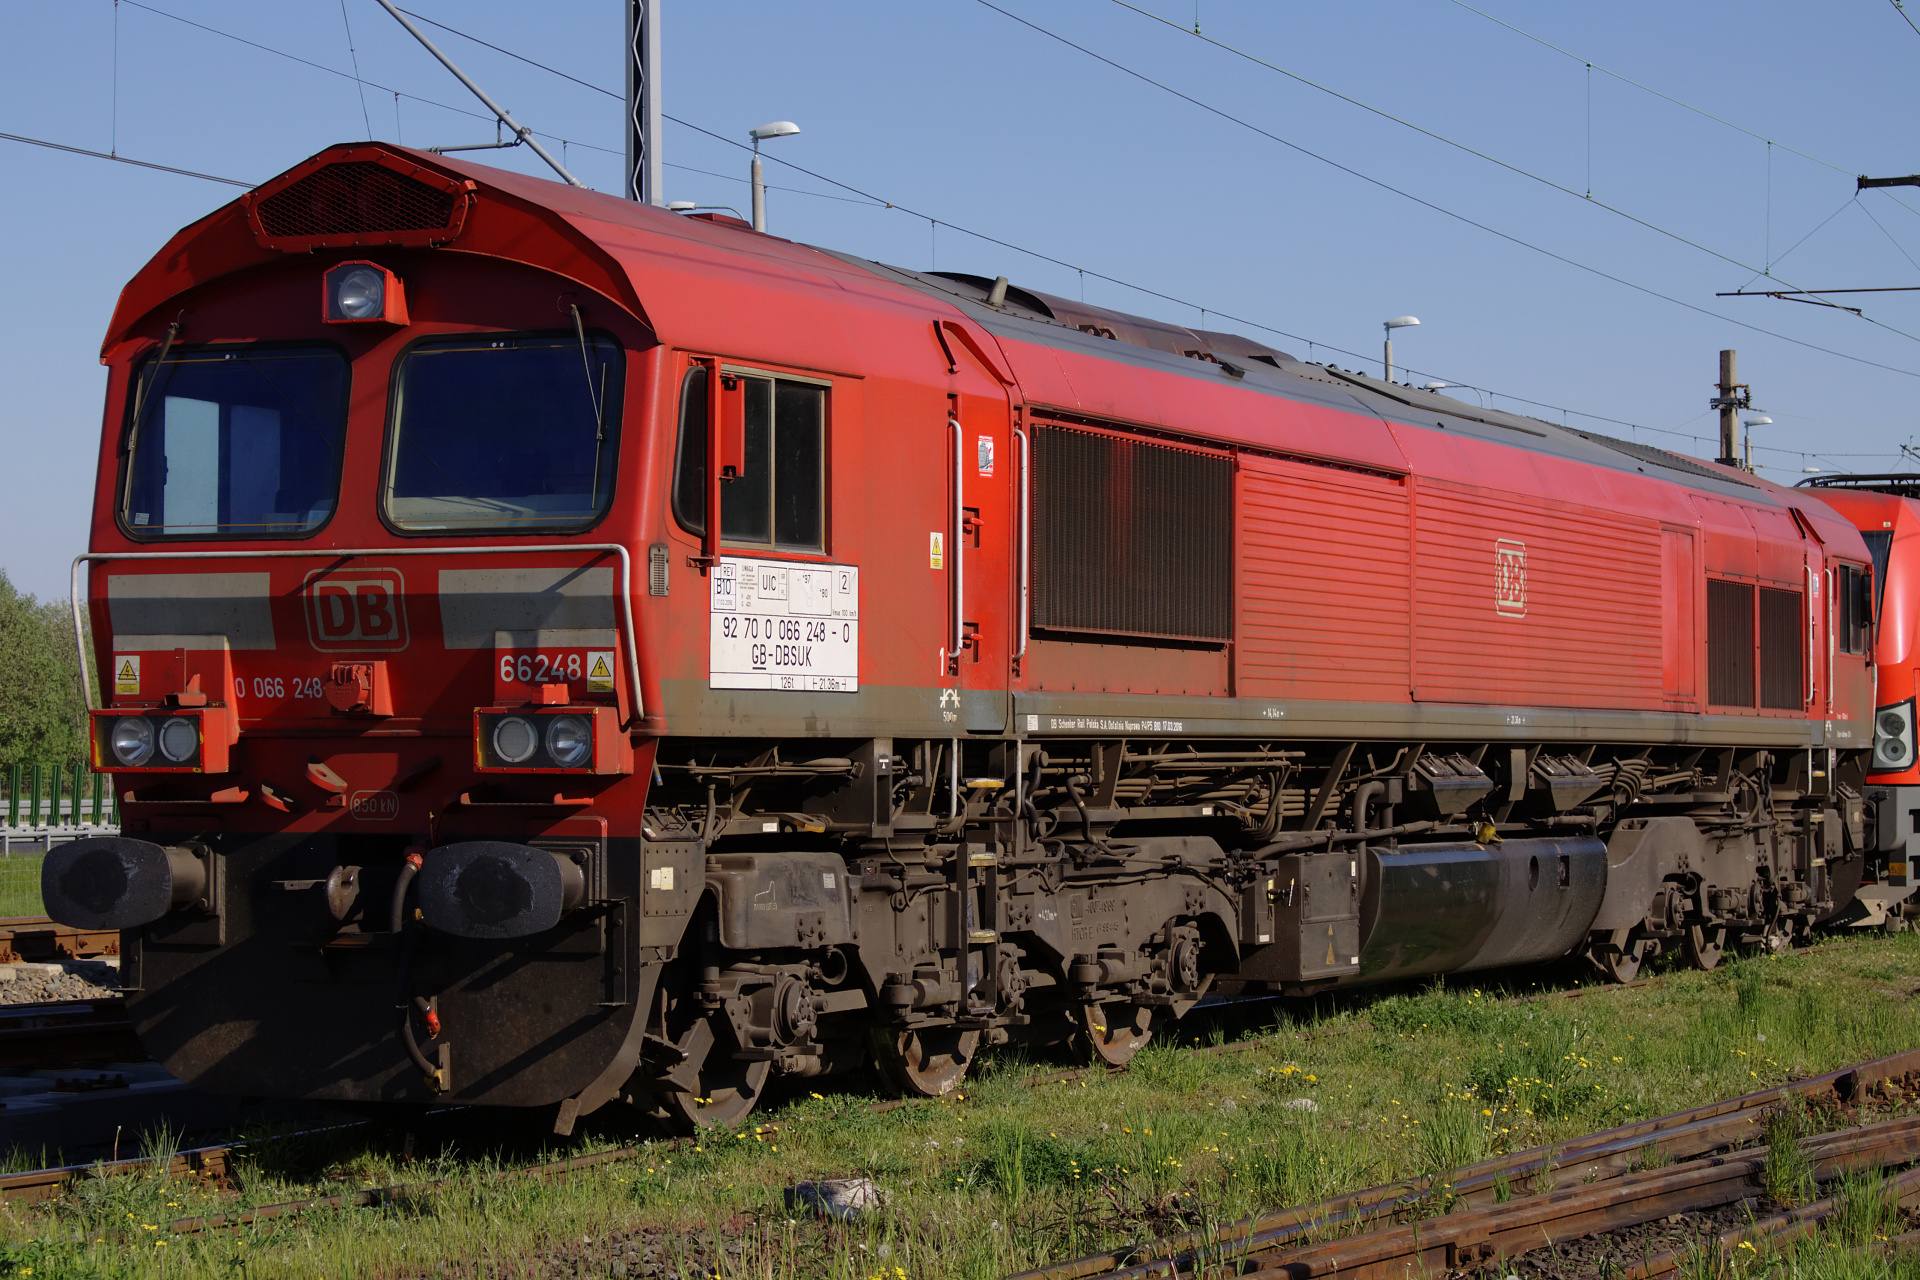 JT42CWR 66248 (Vehicles » Trains and Locomotives » EMD JT42CWR (Class 66))